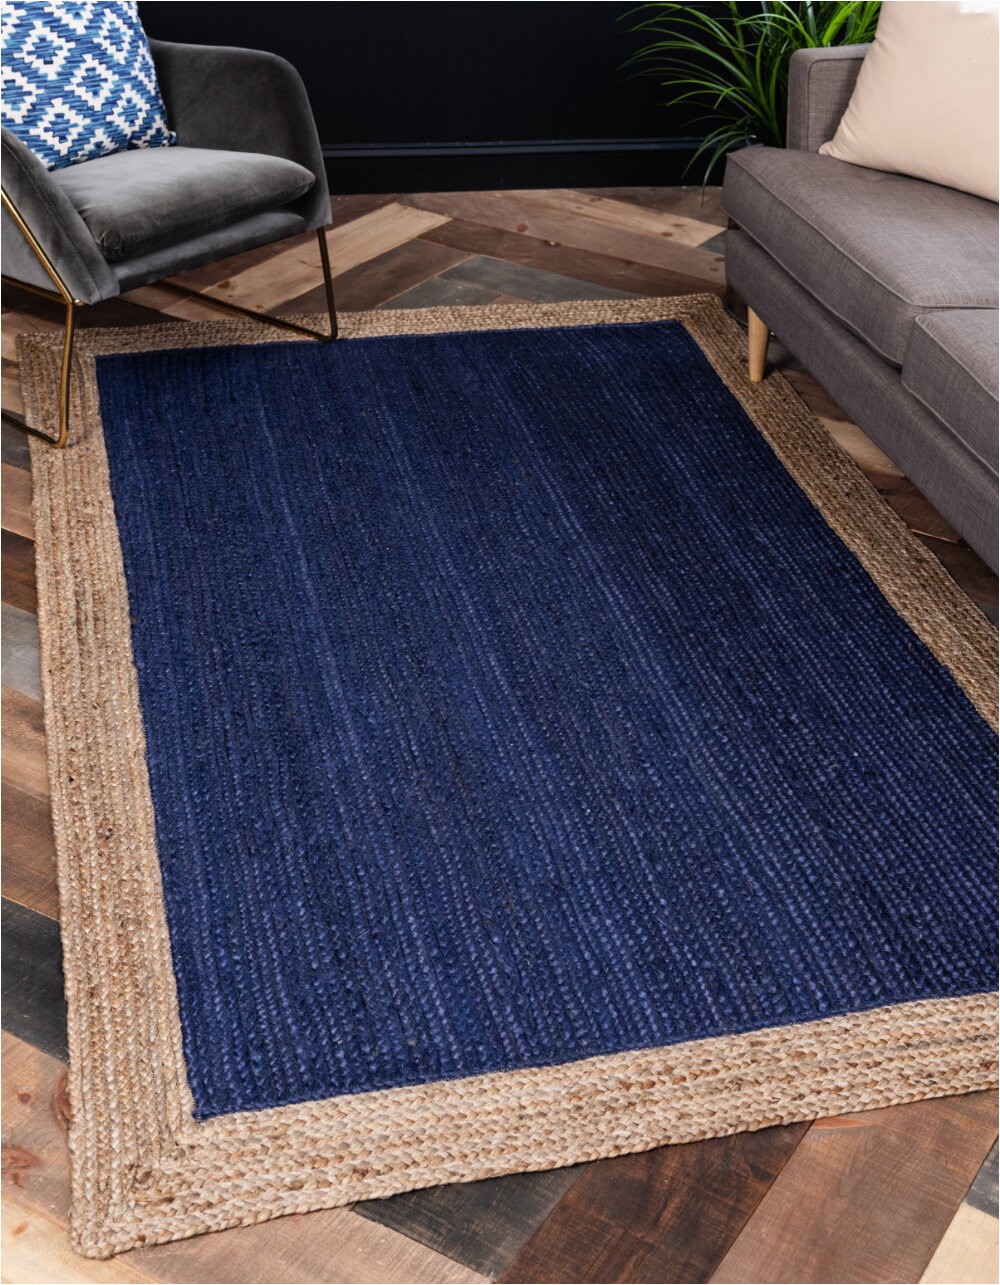 niagara hand braided navy bluebrown area rug